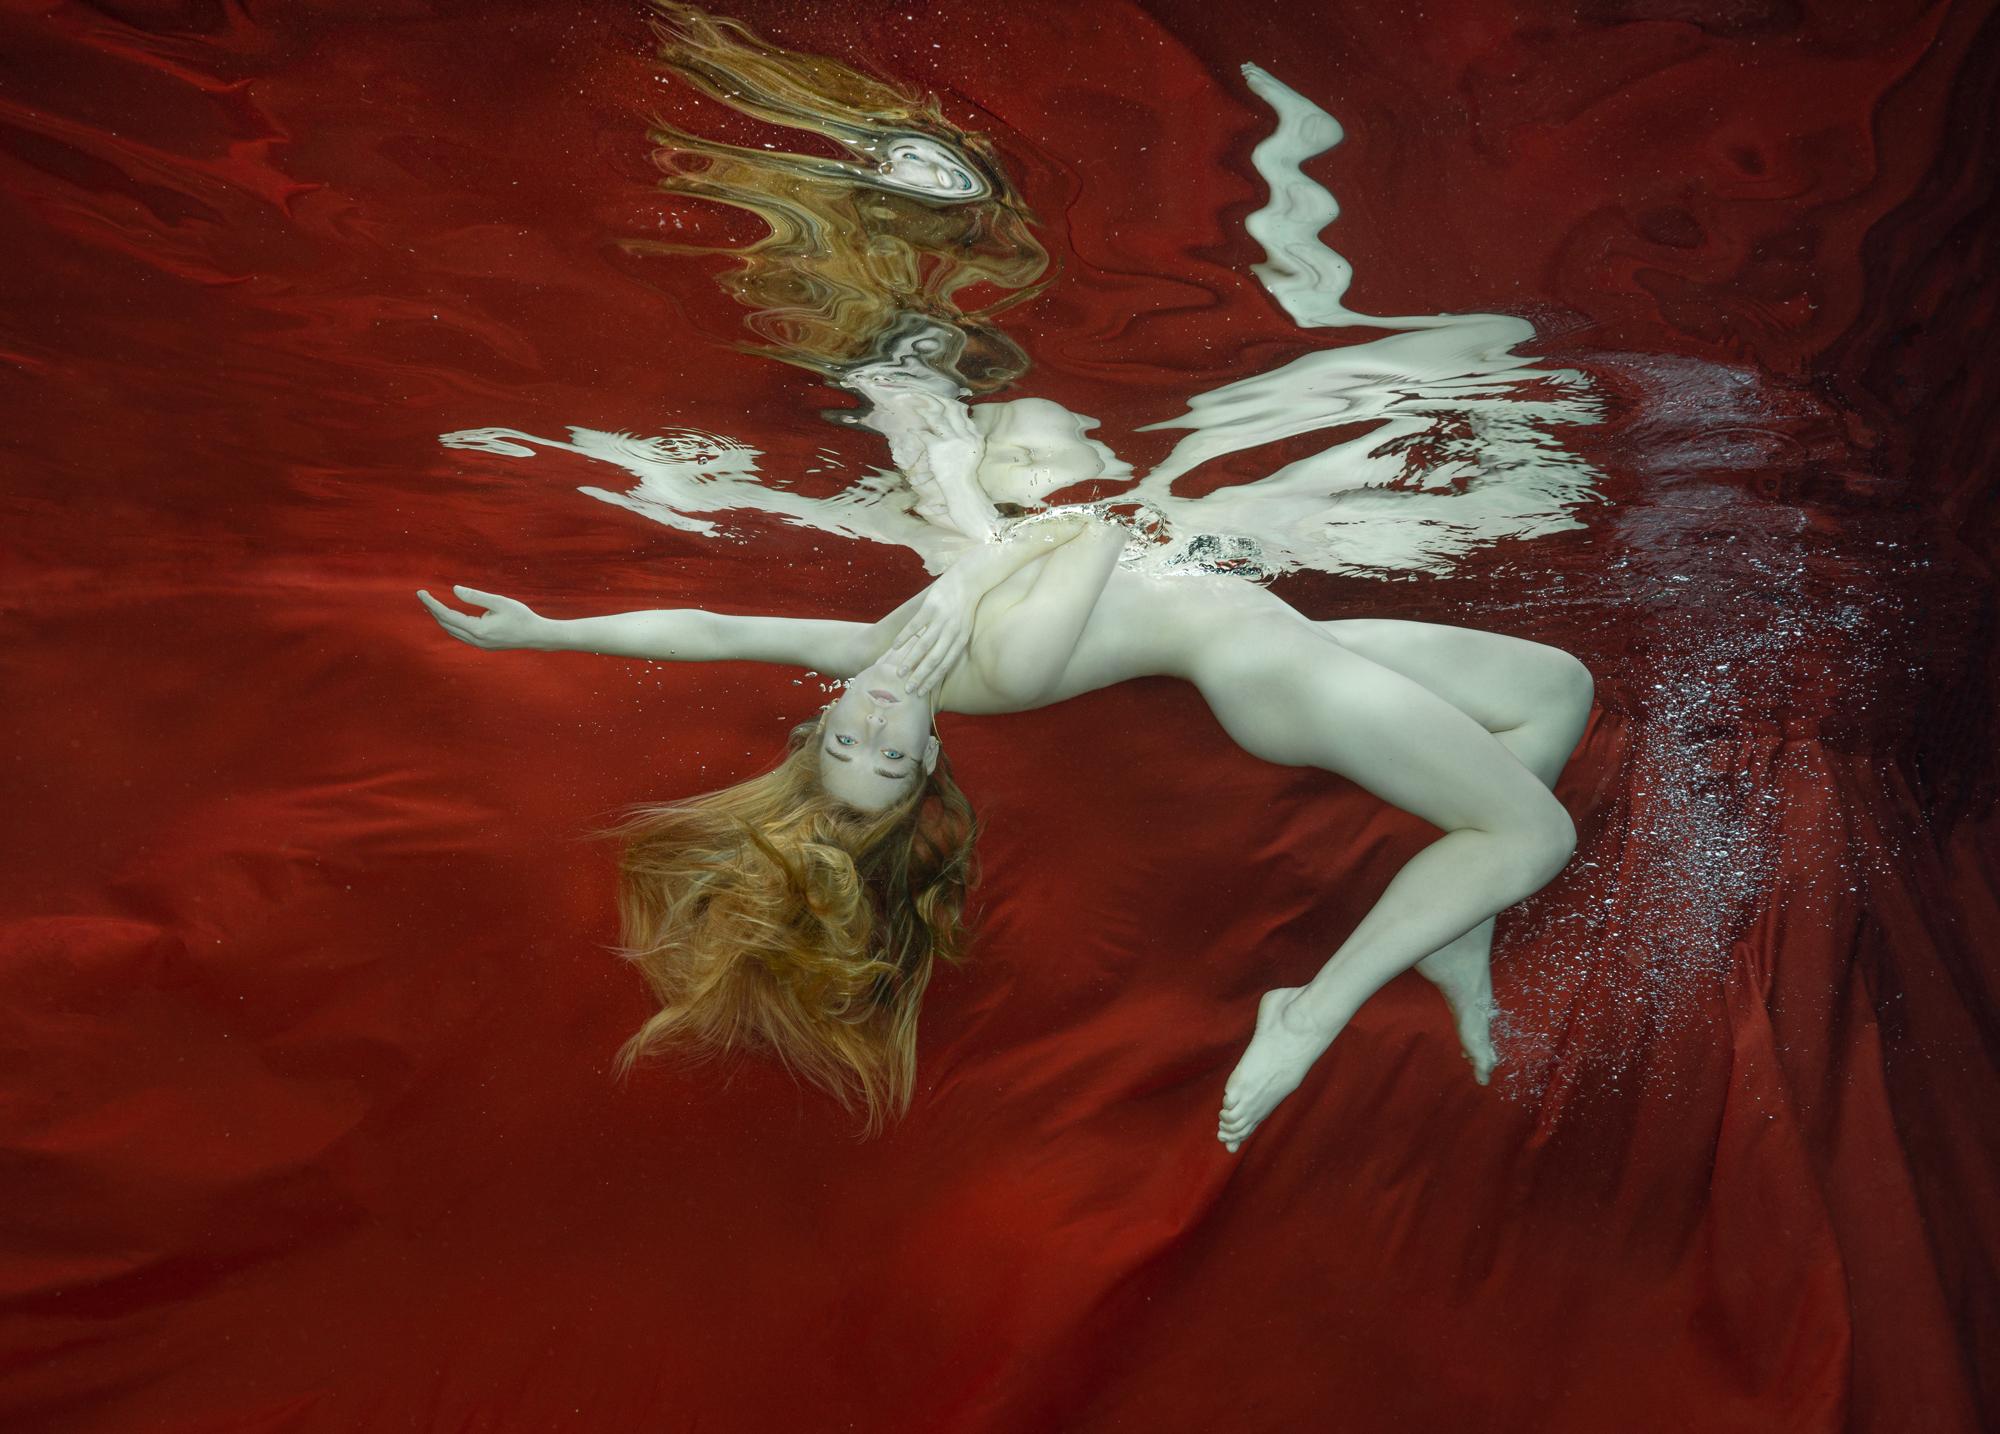 Liquid Fire - underwater nude photograph - archival pigment print